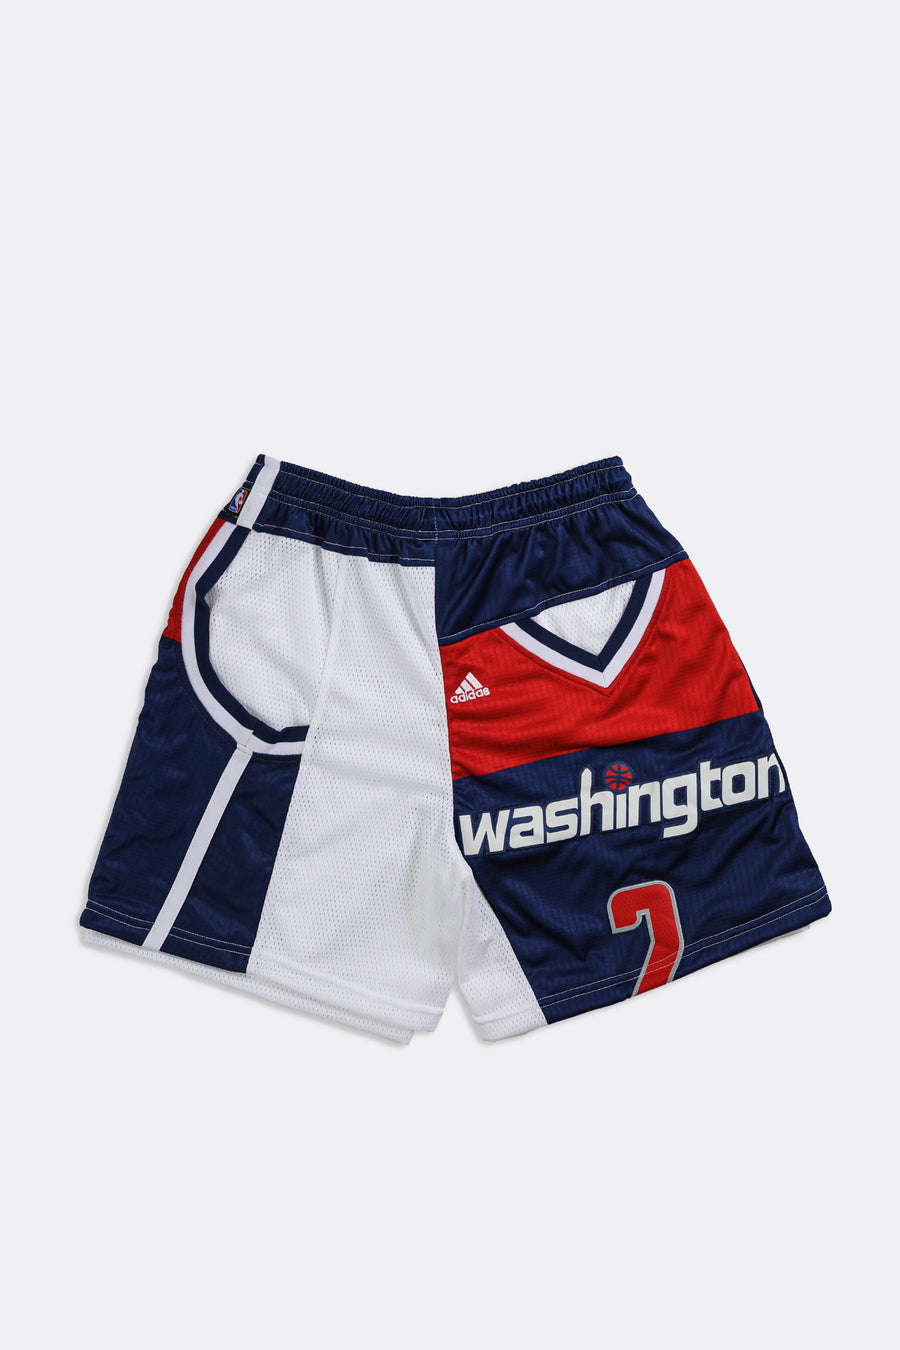 Unisex Rework Wizards NBA Jersey Shorts - Women-M, Men-S